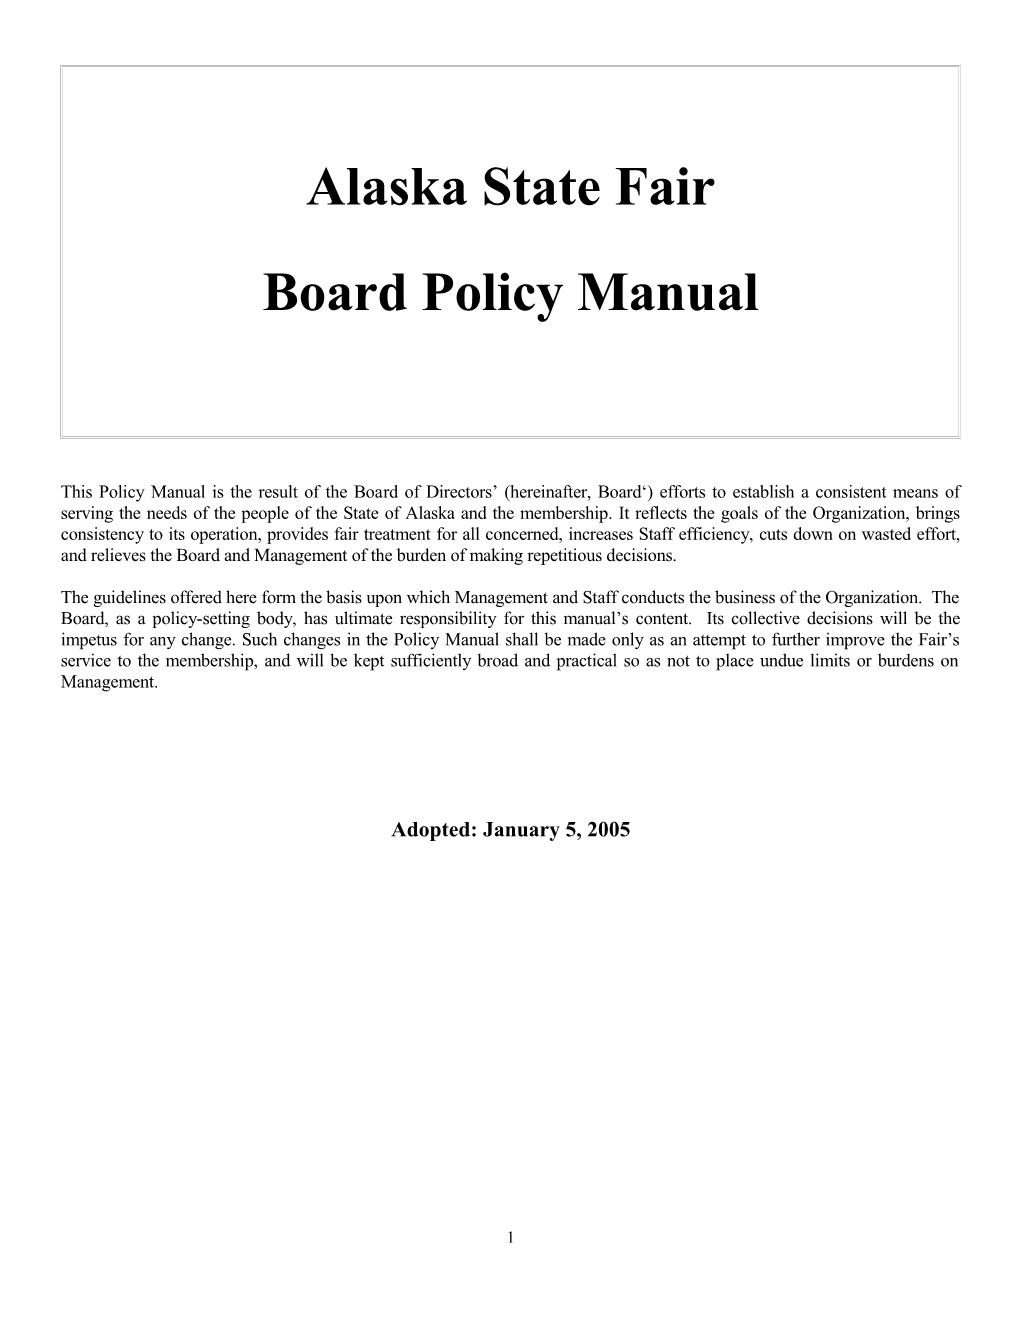 ASF Board Policy